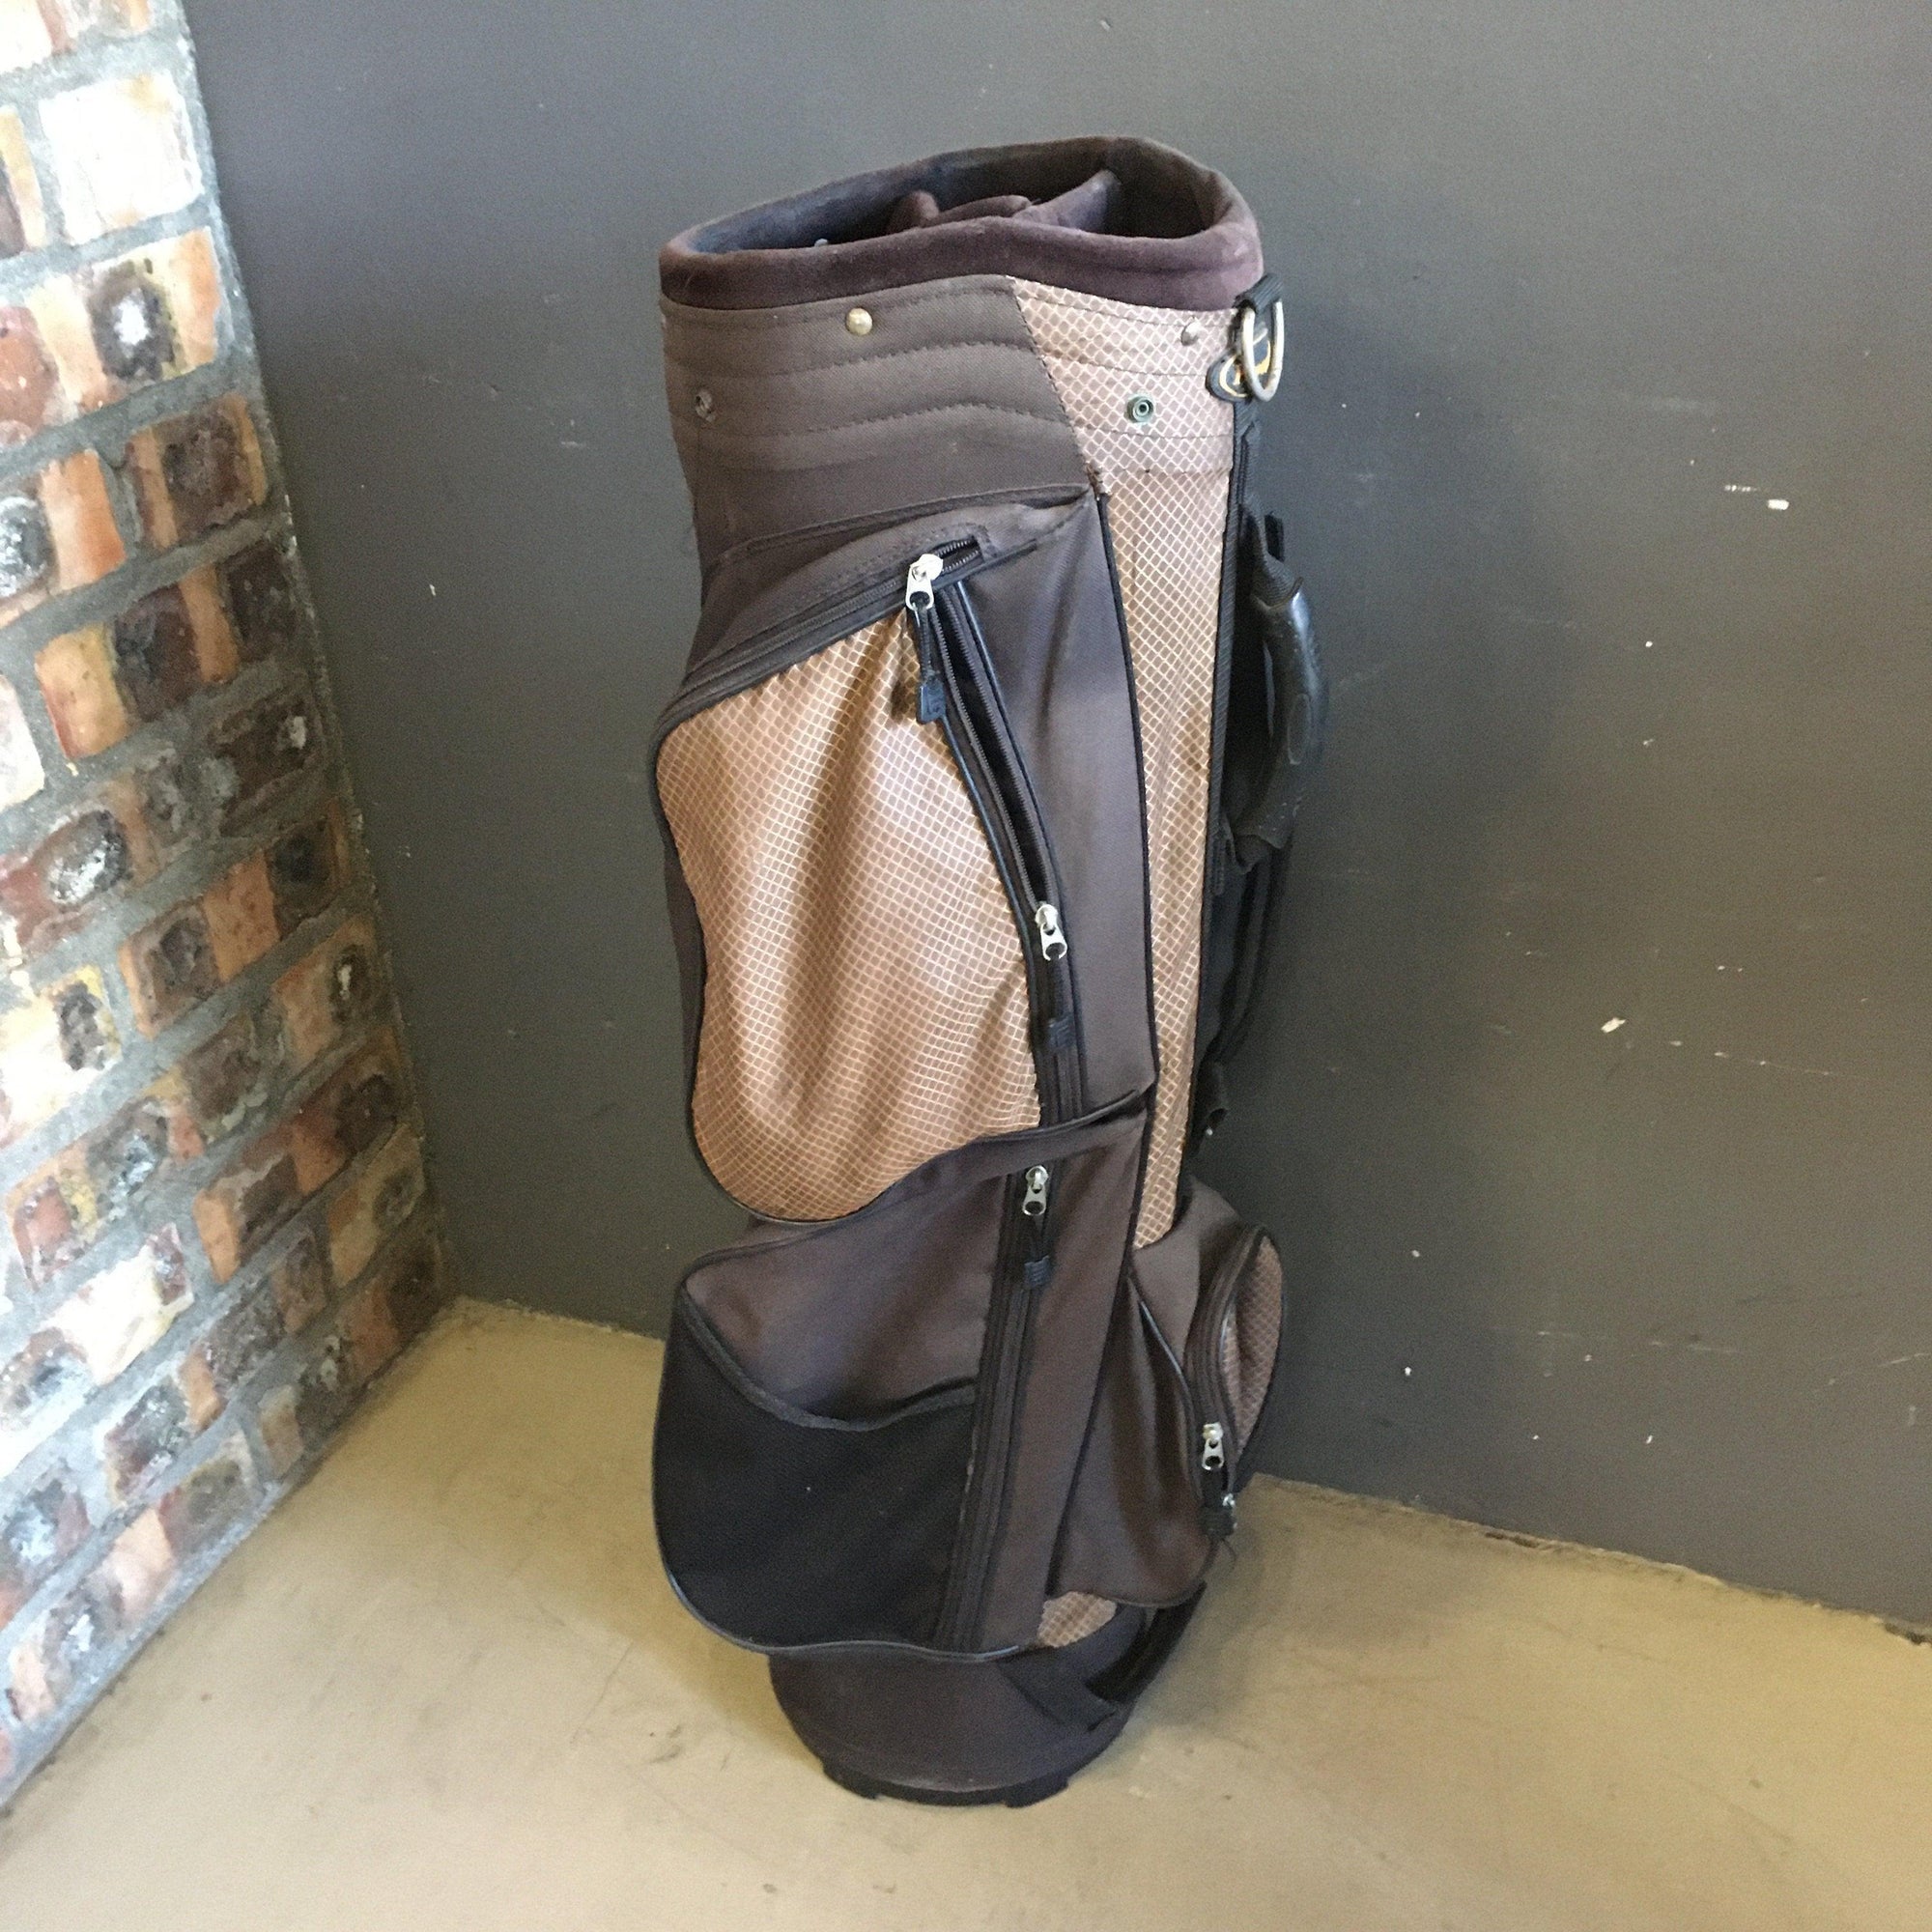 Power Bilt Golf Bag - 2ndhandwarehouse.com